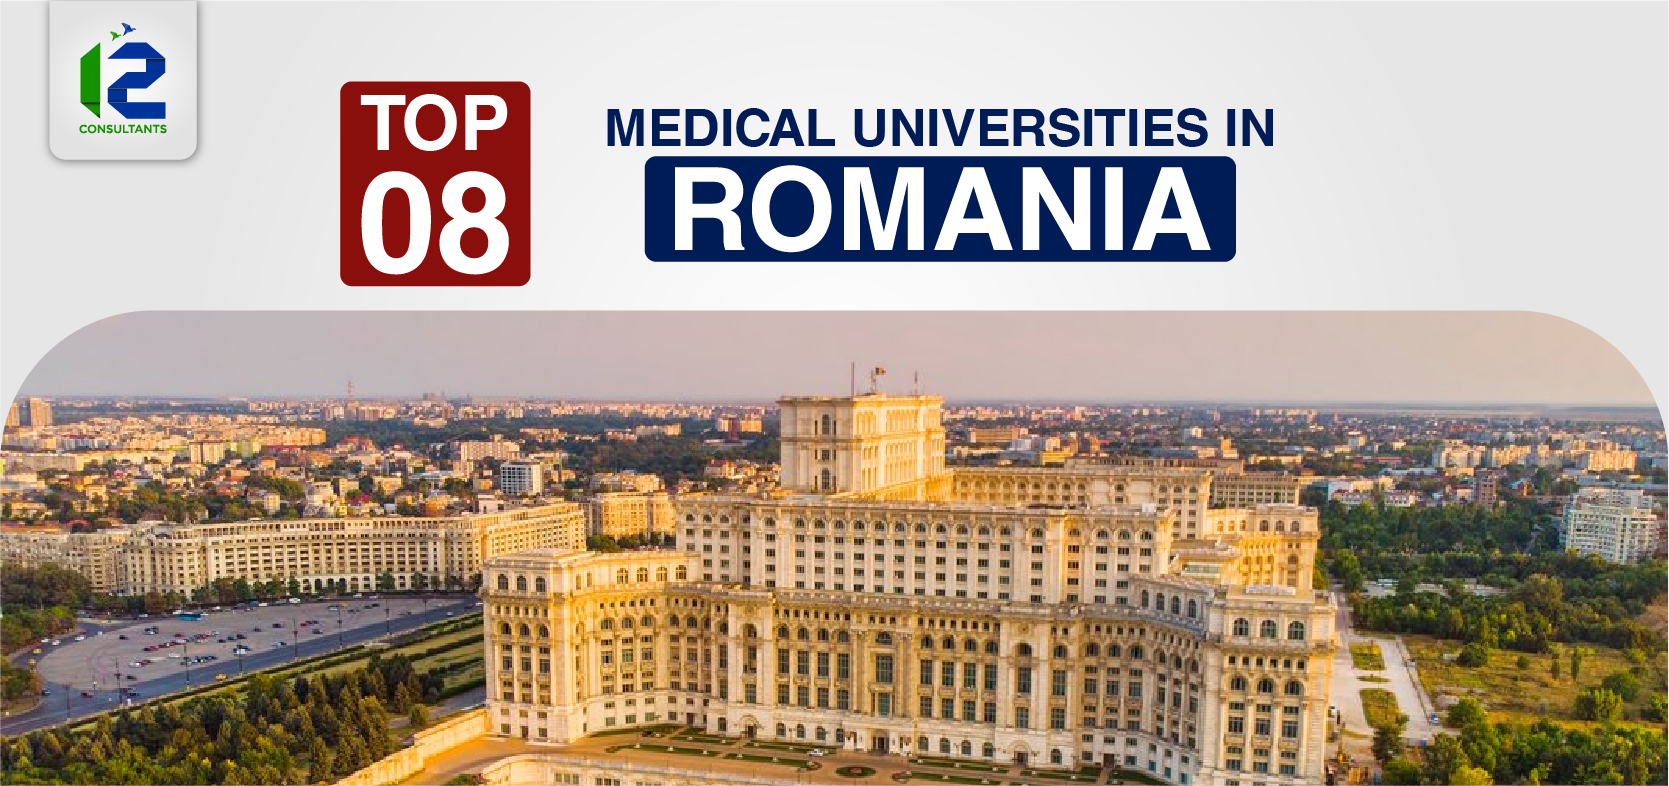 Top Medical Universities In Romania